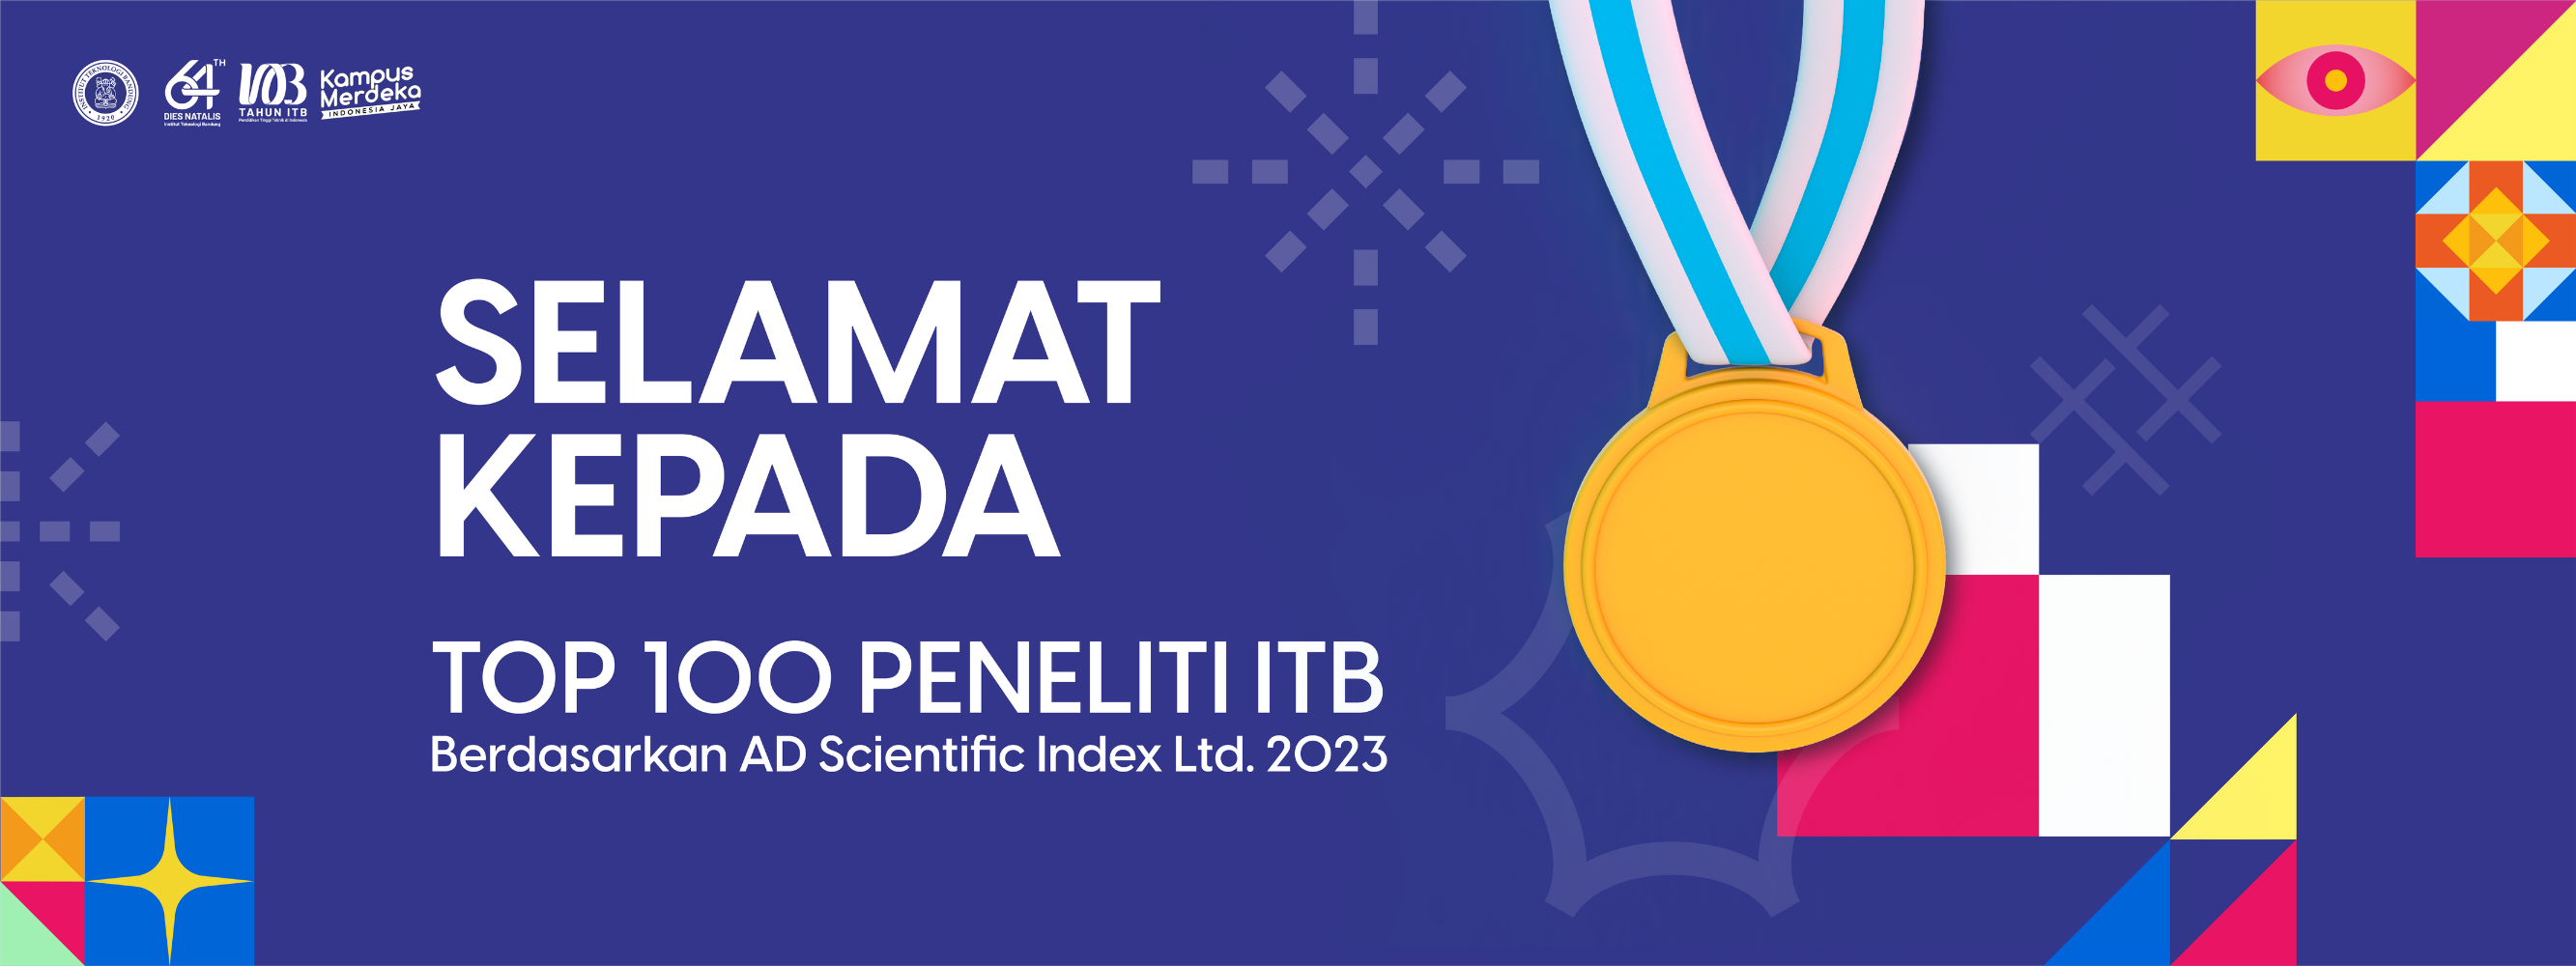 Prestasi Internasional Dosen 1 2023 Top 100 Peneliti ITB